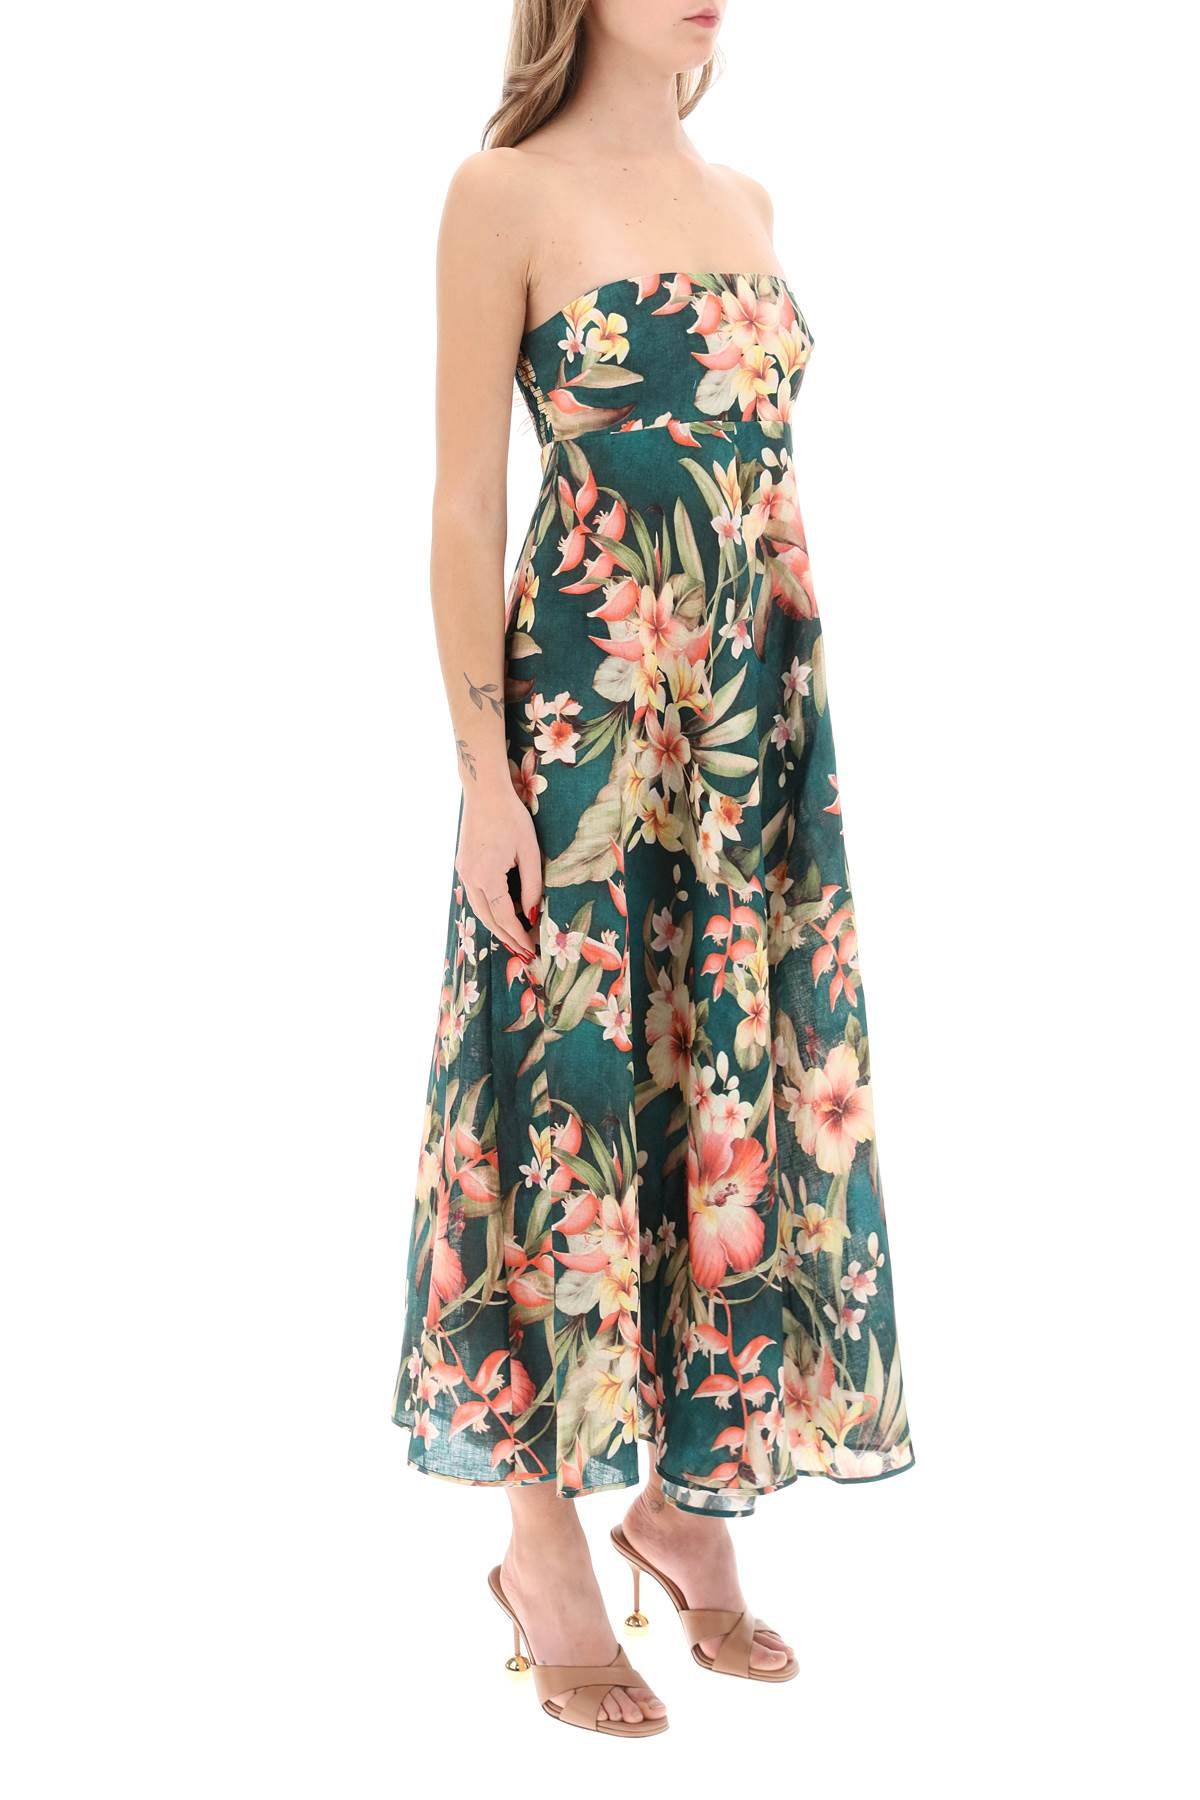 Zimmermann lexi floral maxi dress-1